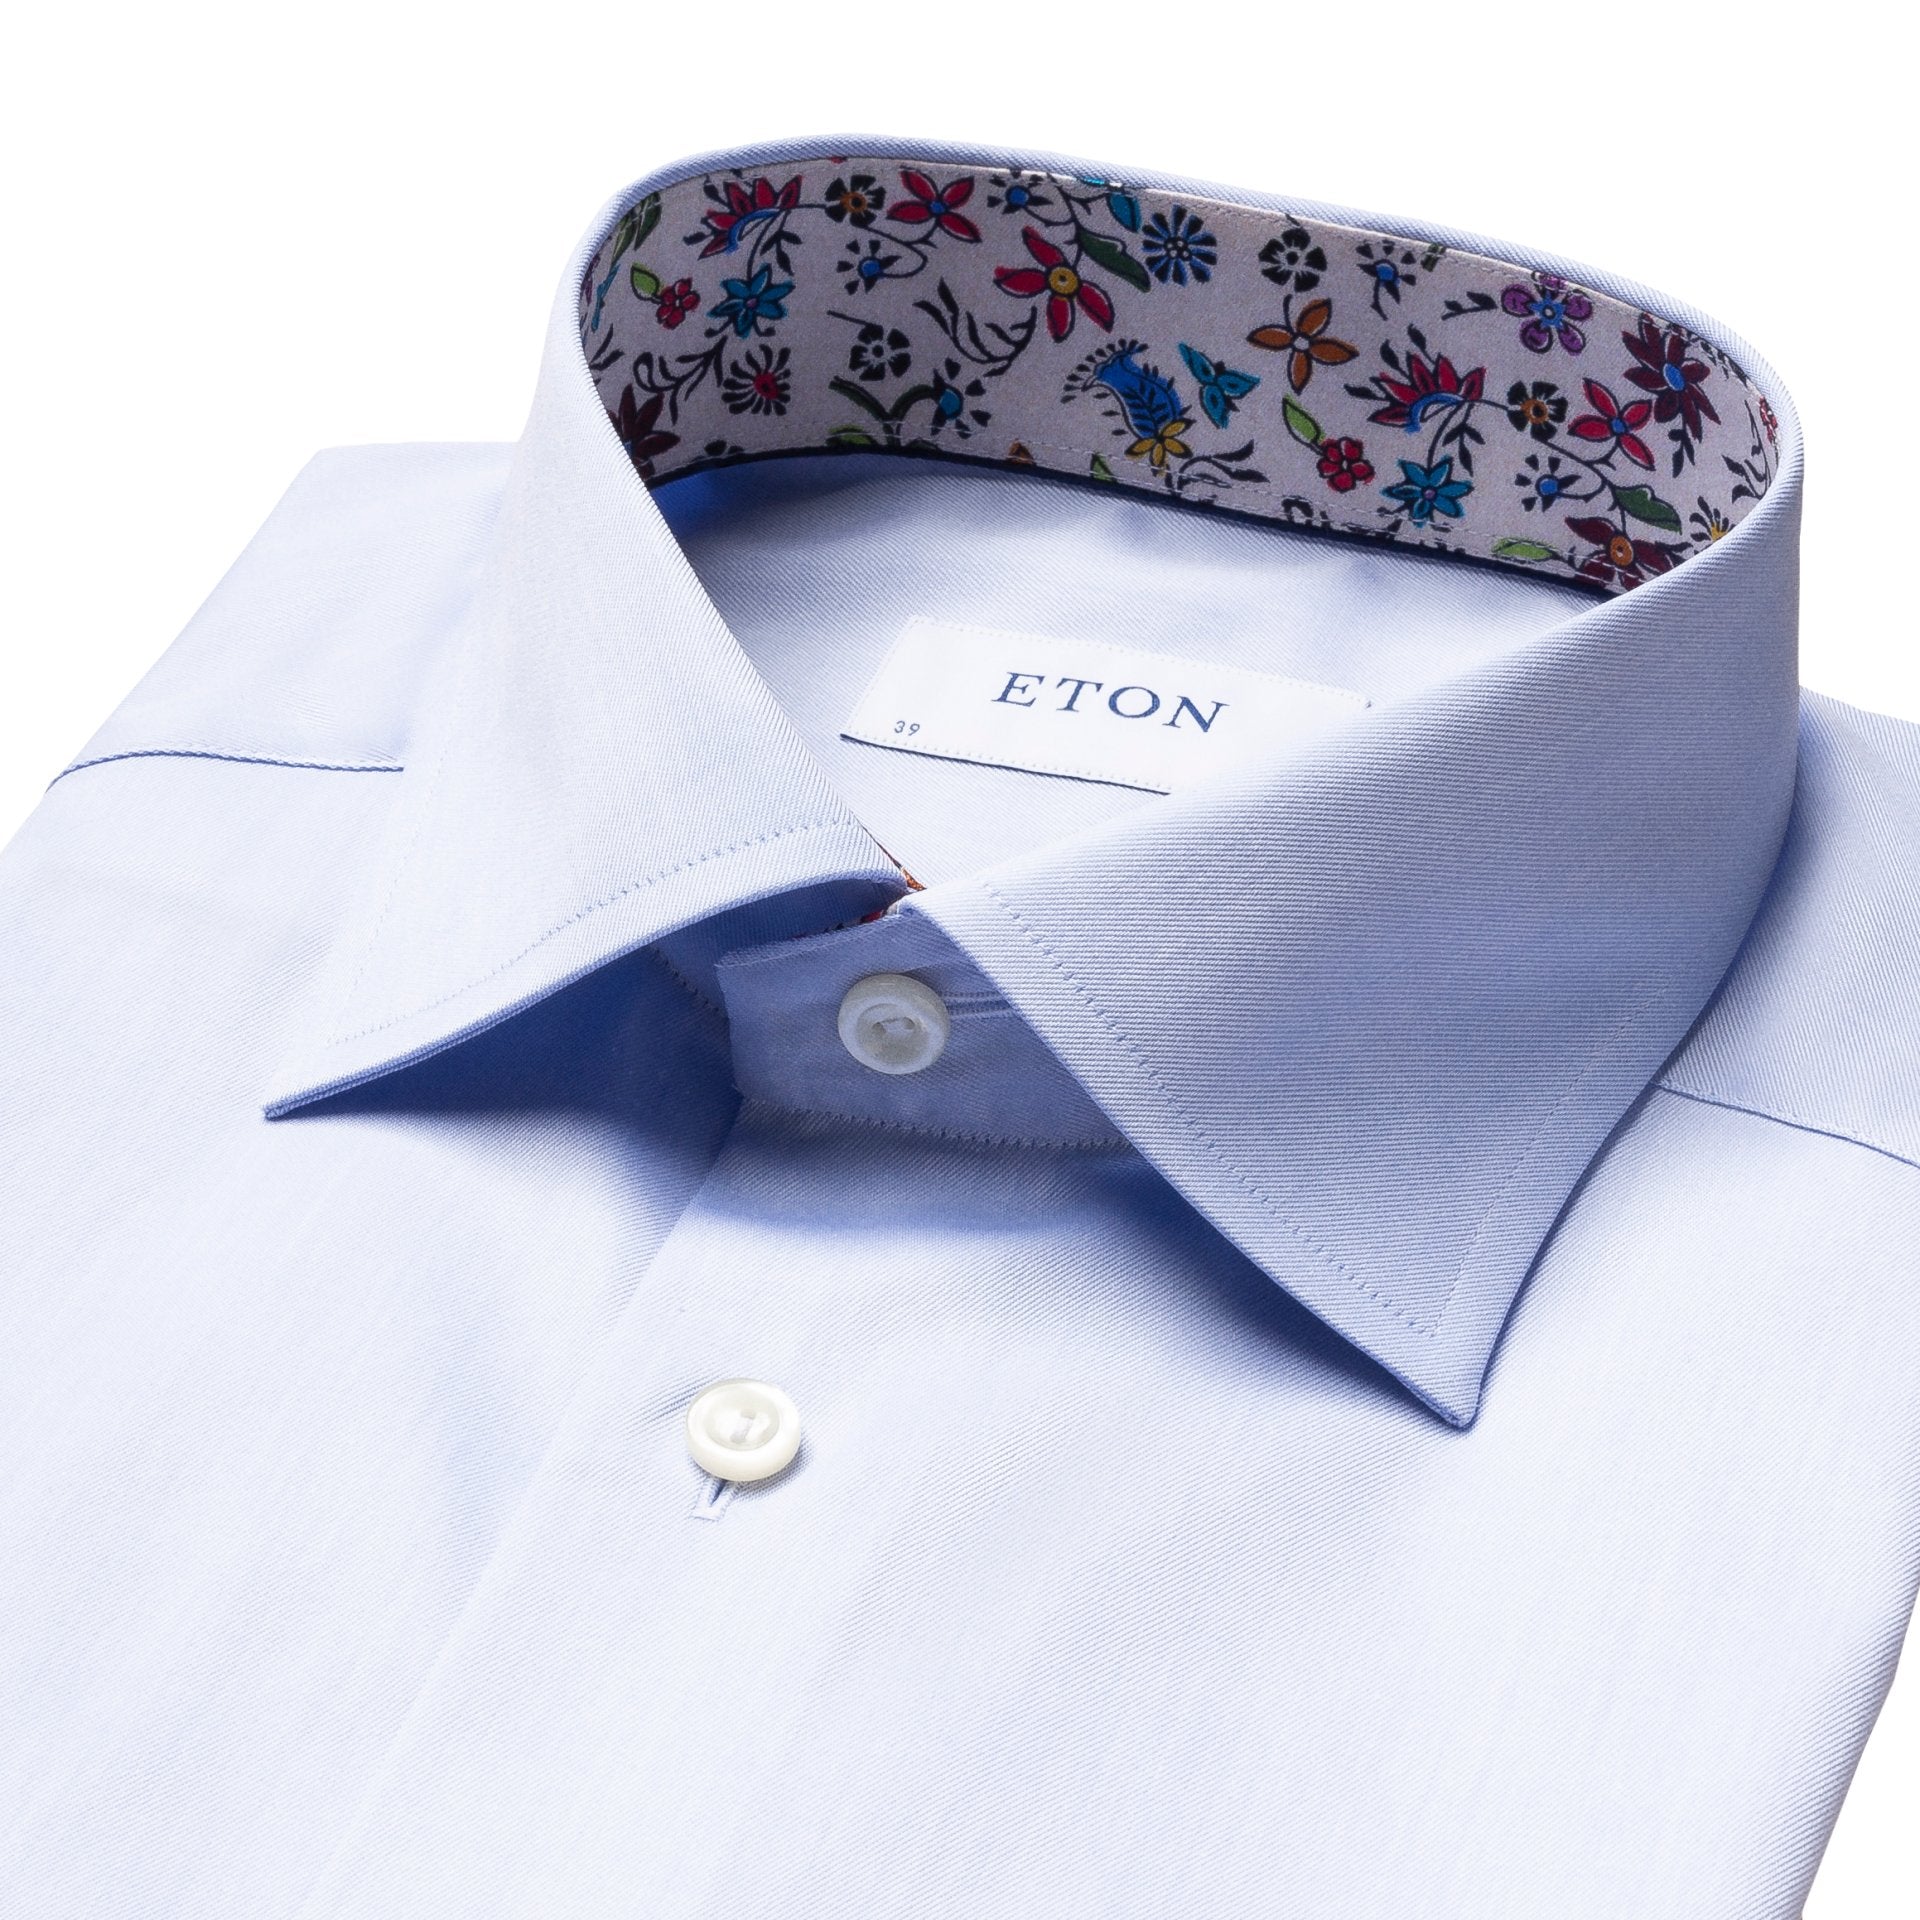 Eton Light Blue Twill Shirt With Floral Trim.